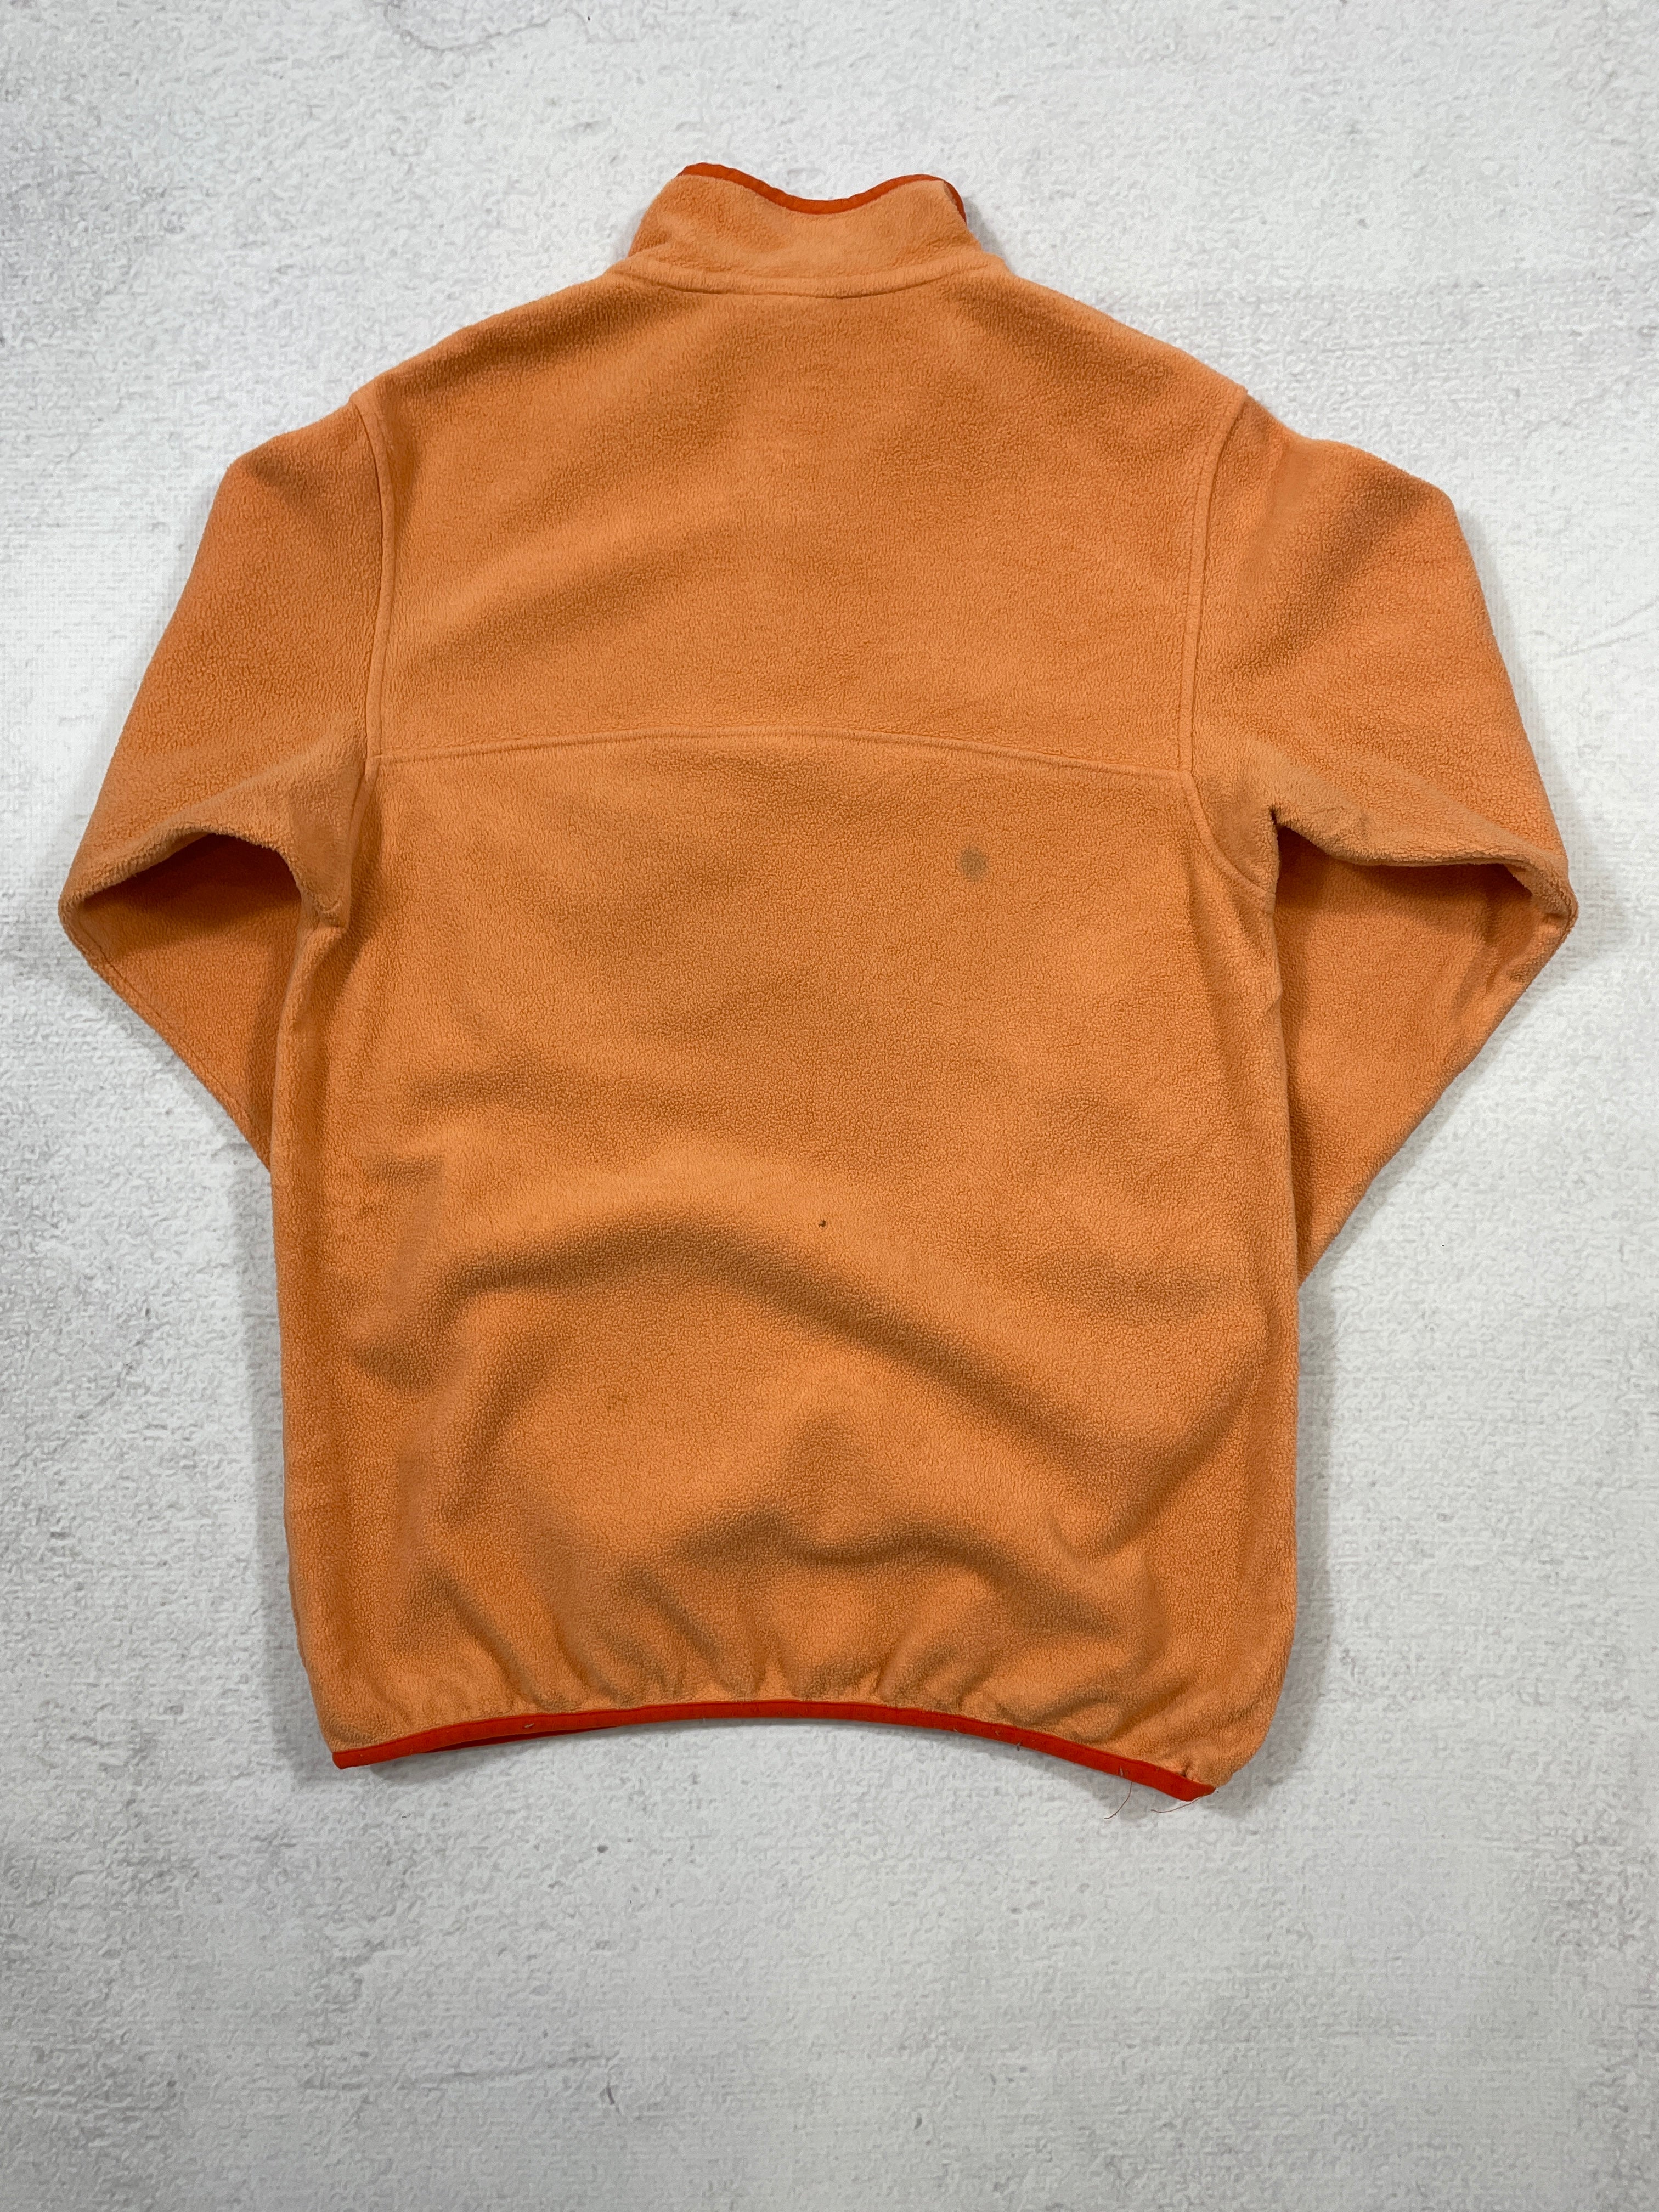 Vintage Patagonia Fleece Snap-T Synchilla Sweatshirt - Women's Medium